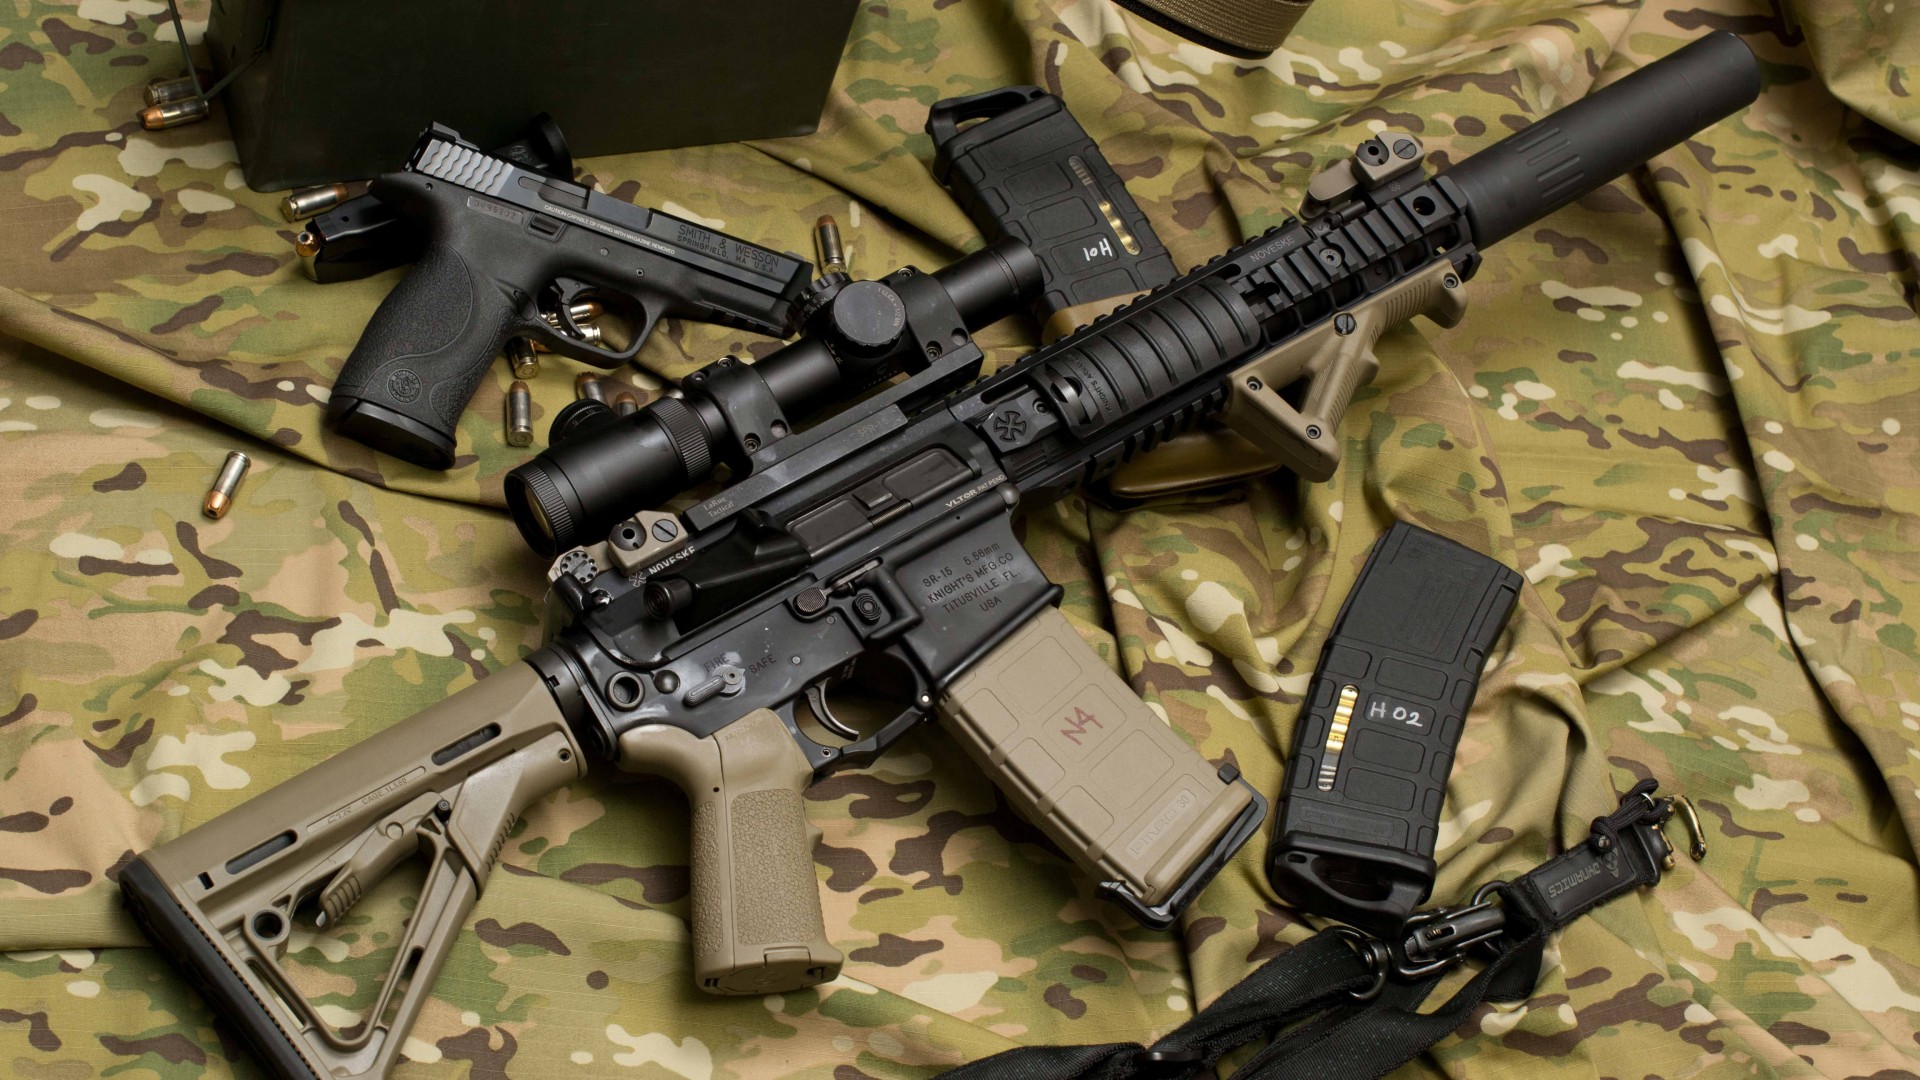 винтовка, автомат, оптика, глушитель, пистолет, M4, Larue Tactical, assault rifle, MWS, M4A1, custom, scope, silencer, ammunition, camo (horizontal)